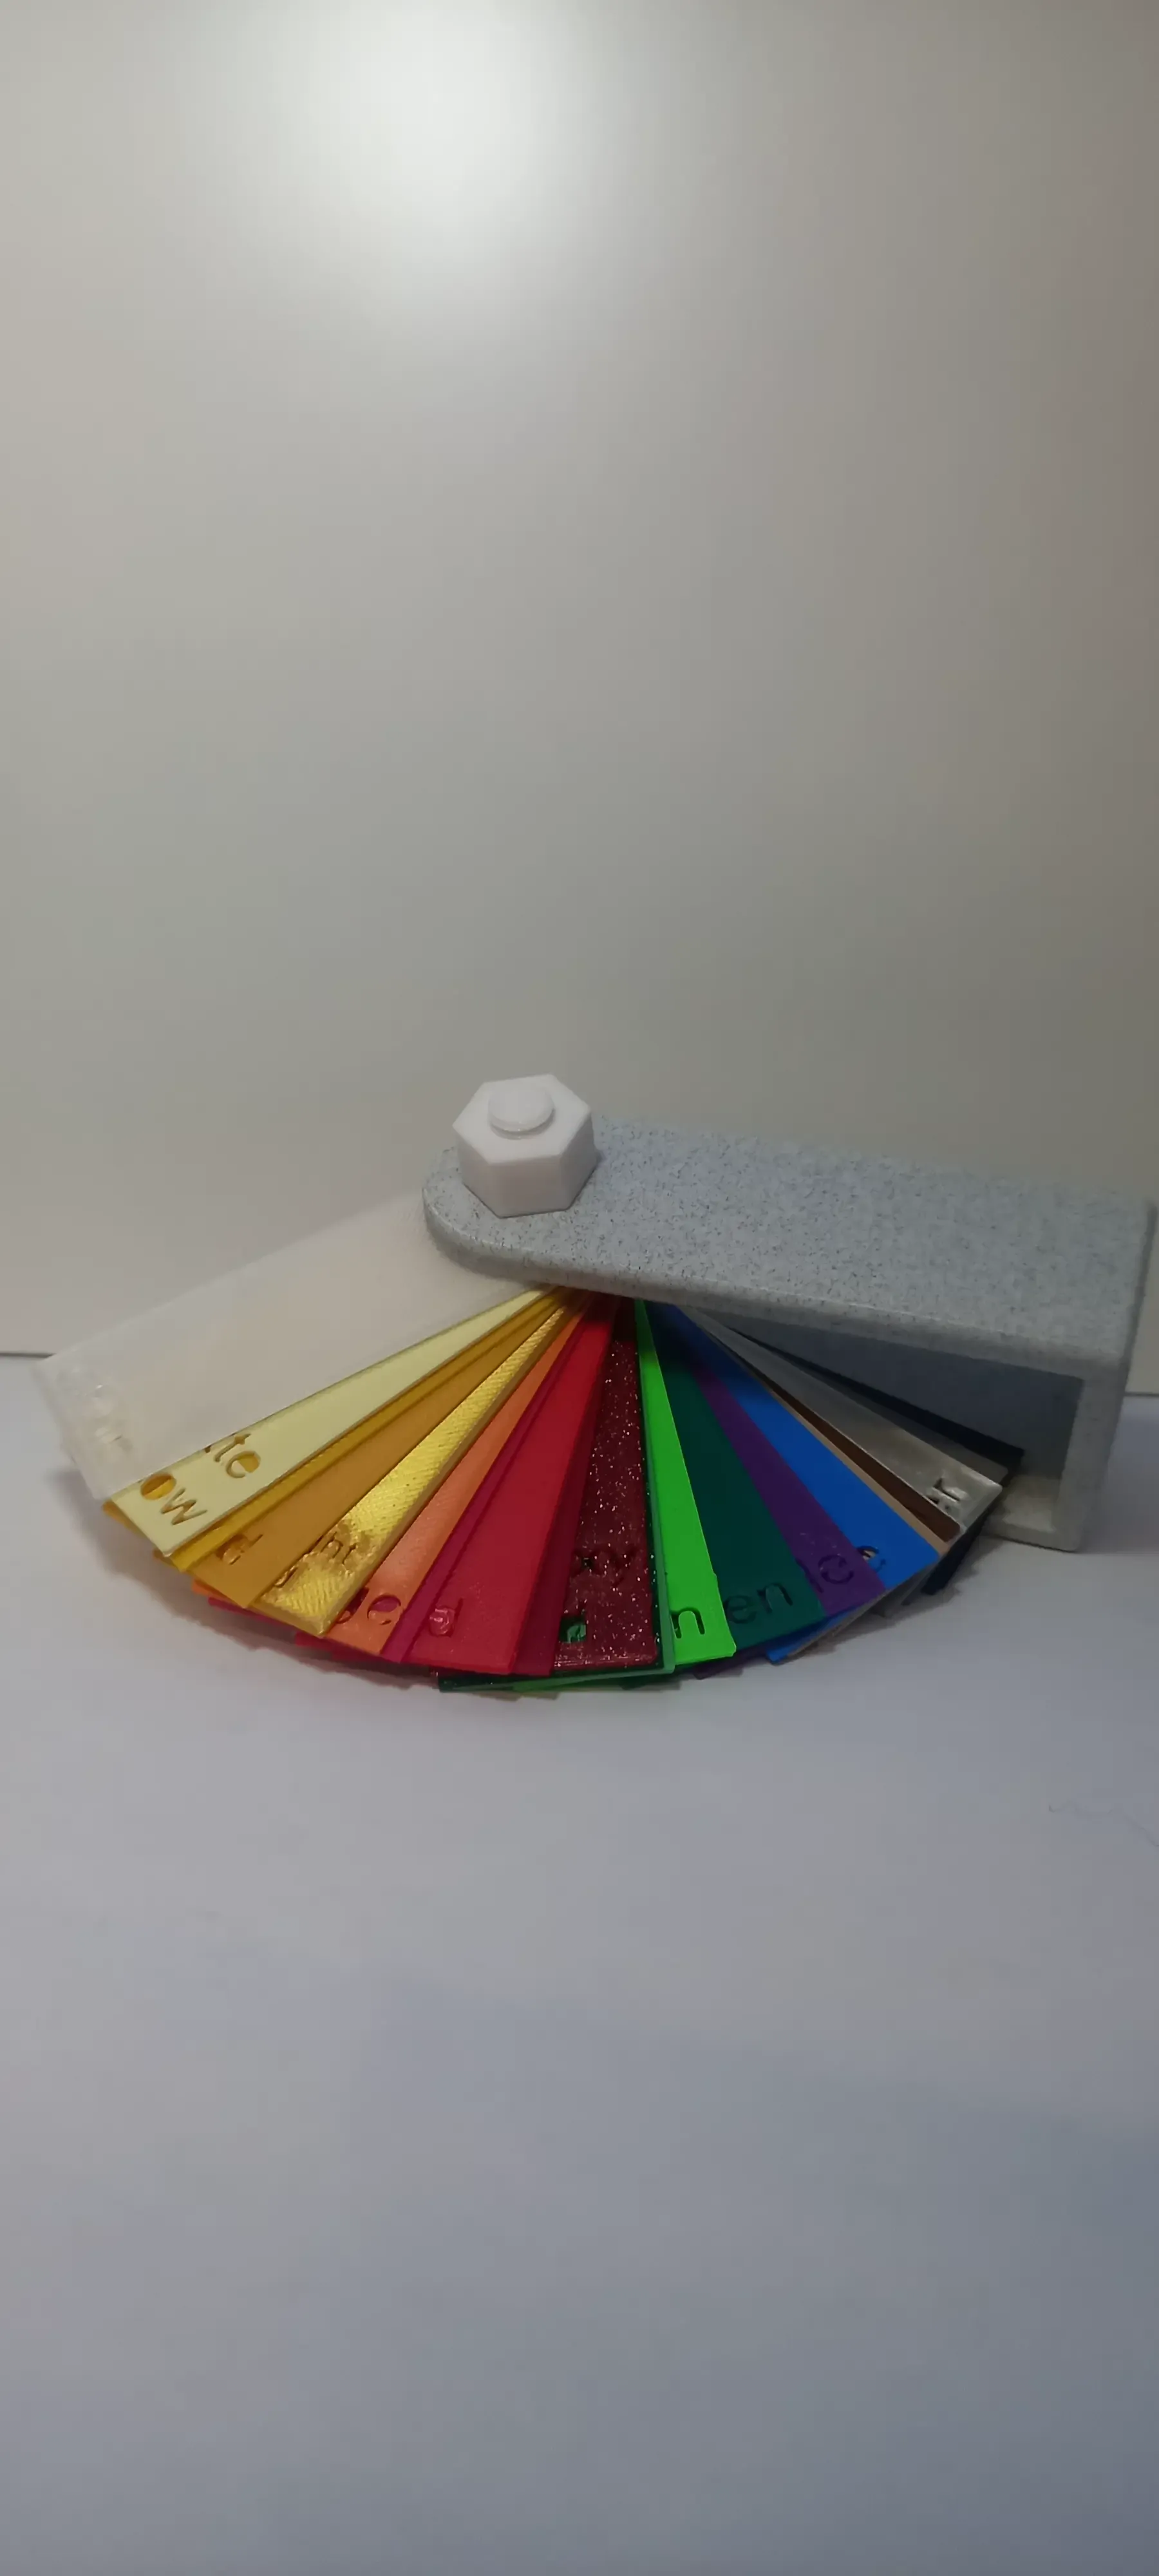 filament sample set